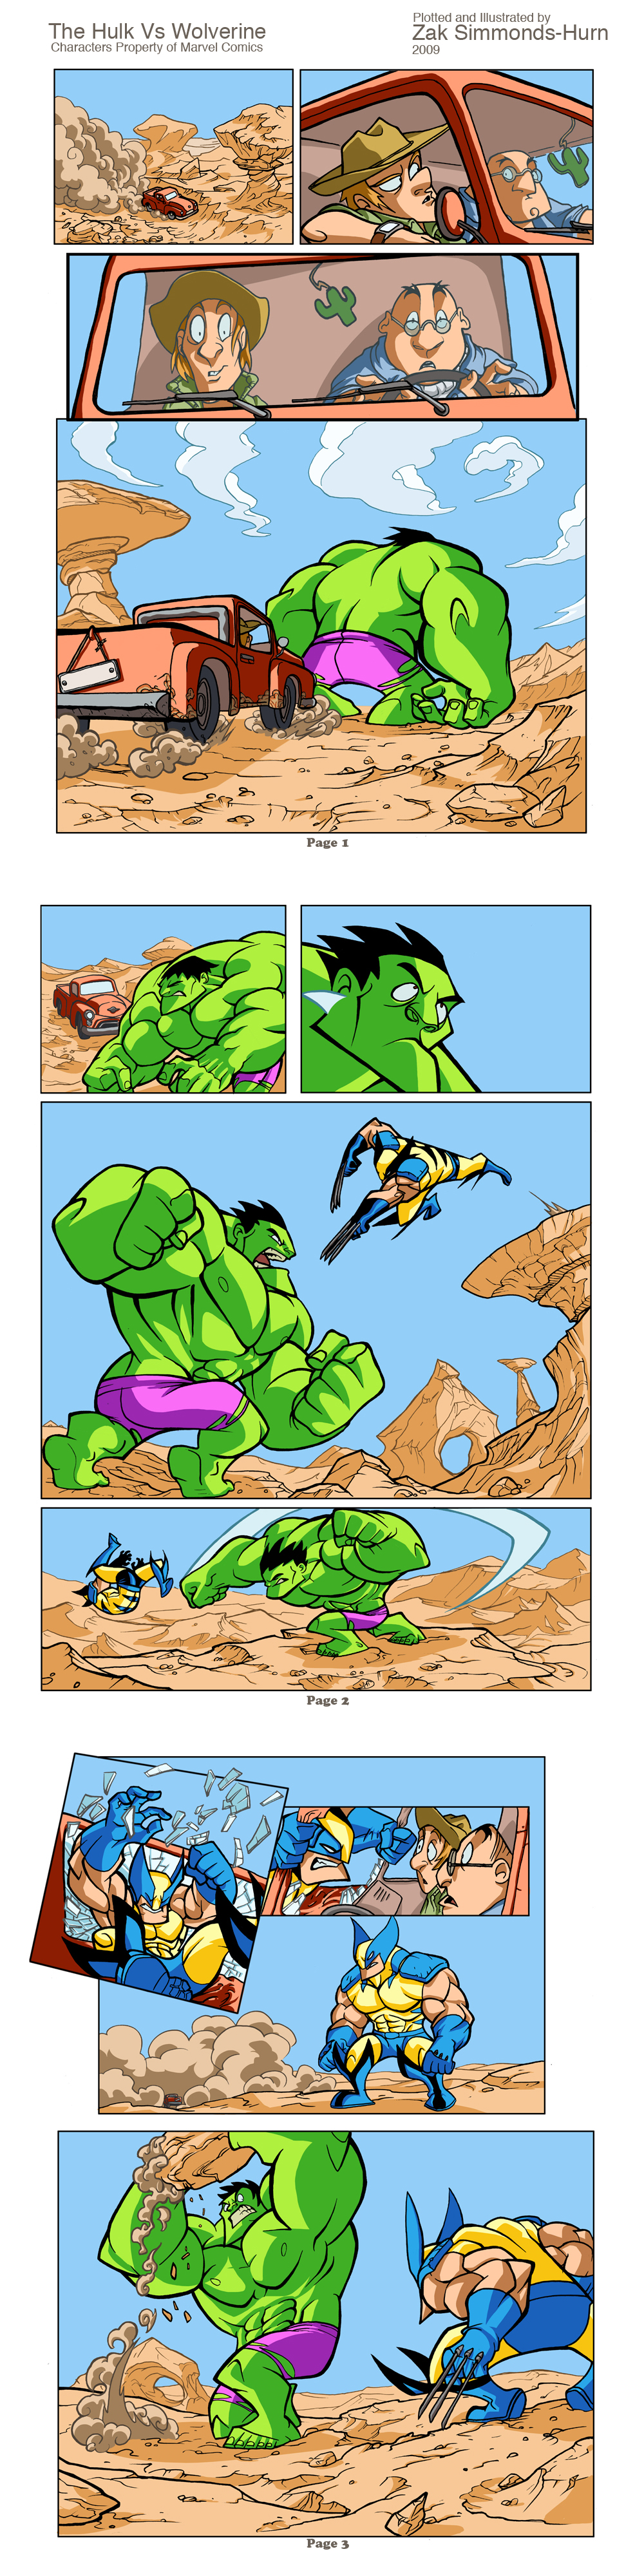 The Hulk vs Wolverine